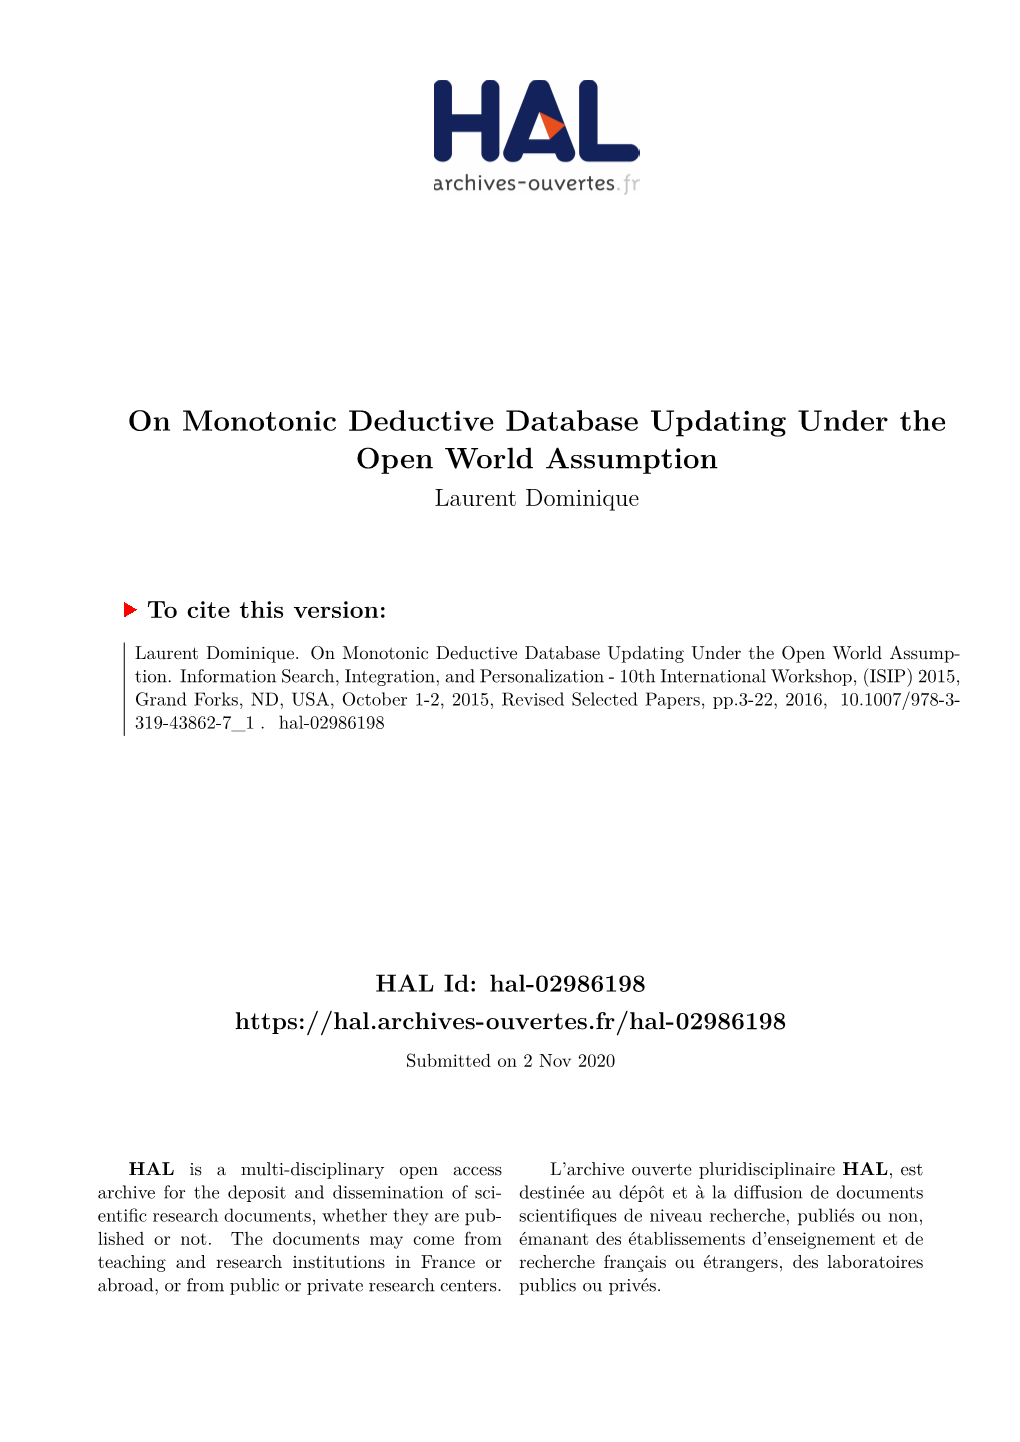 On Monotonic Deductive Database Updating Under the Open World Assumption Laurent Dominique